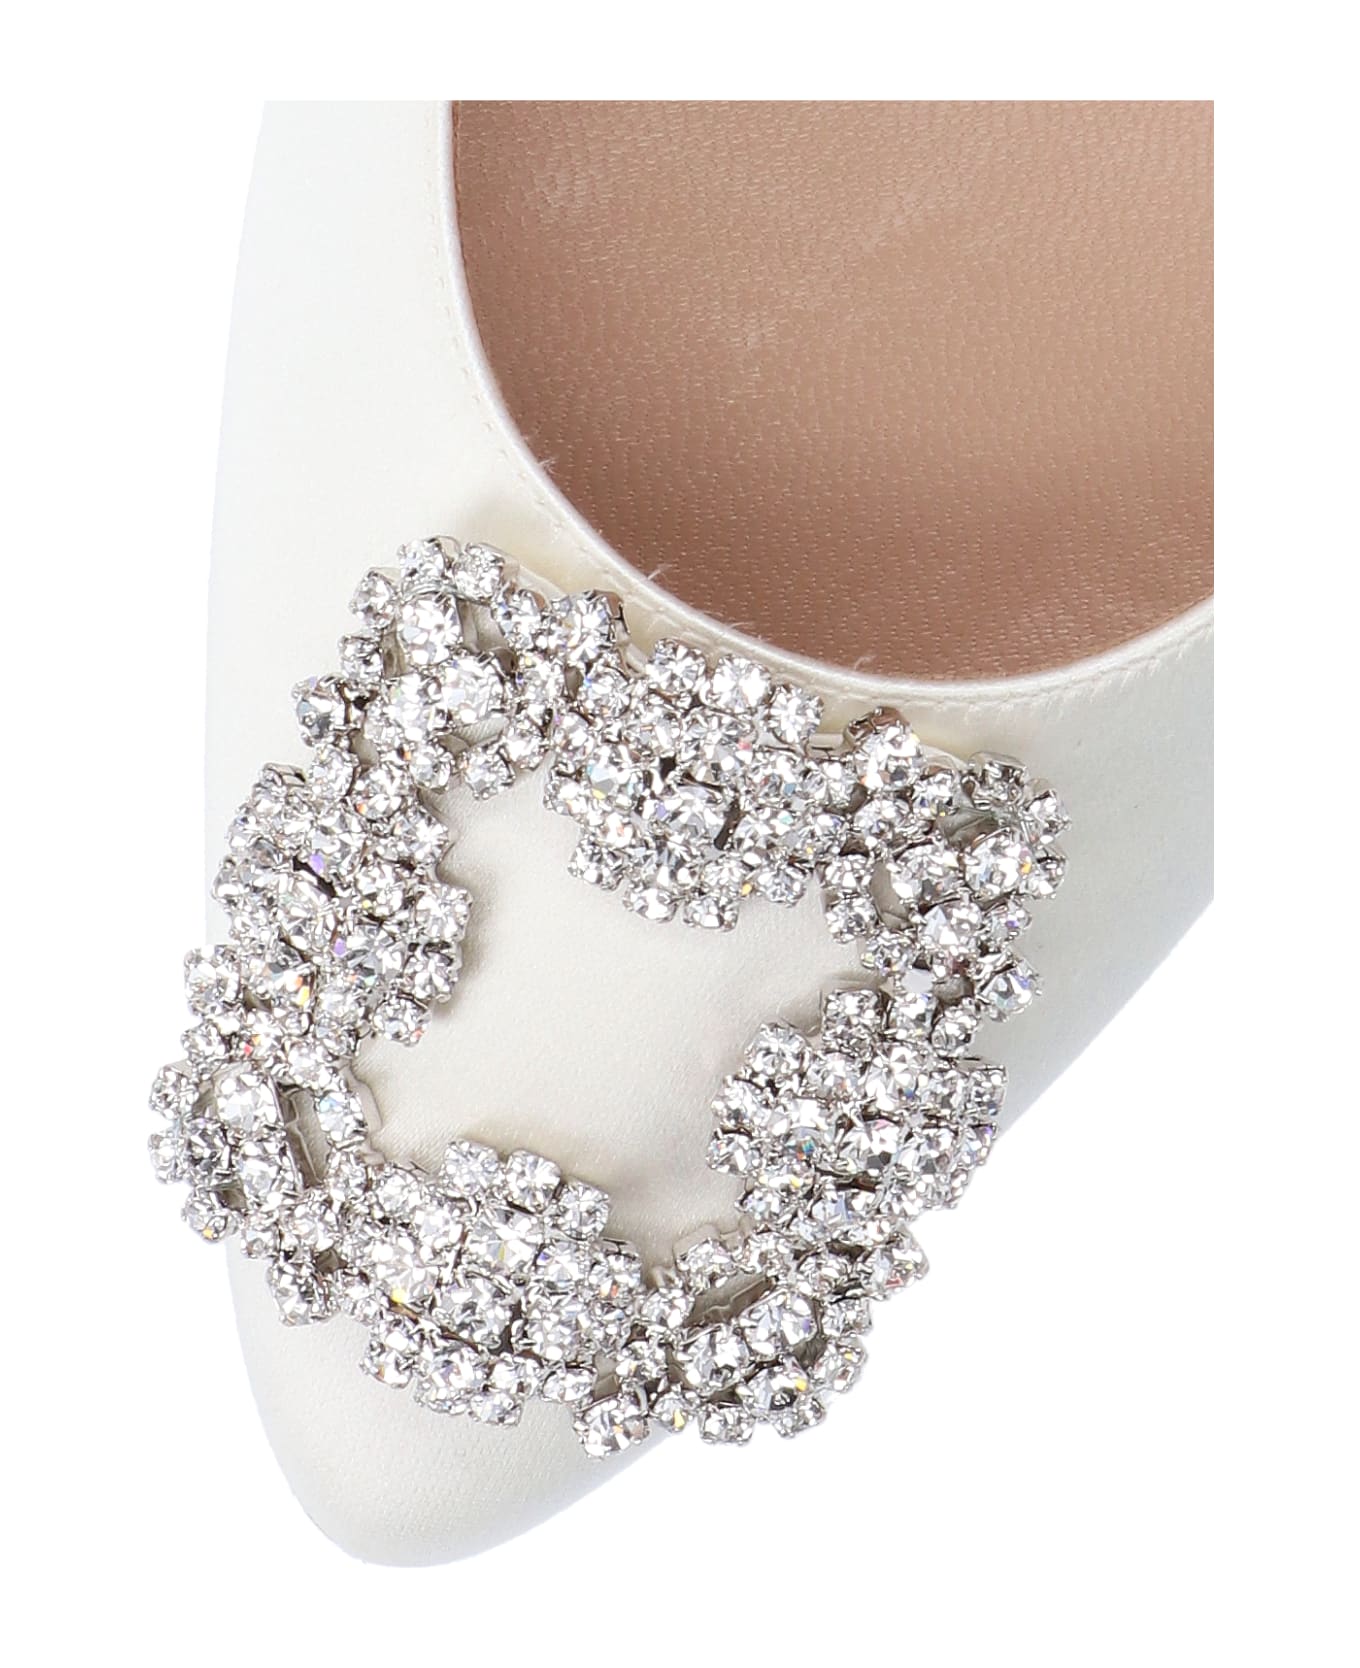 Manolo Blahnik High-heeled Shoe - Cream